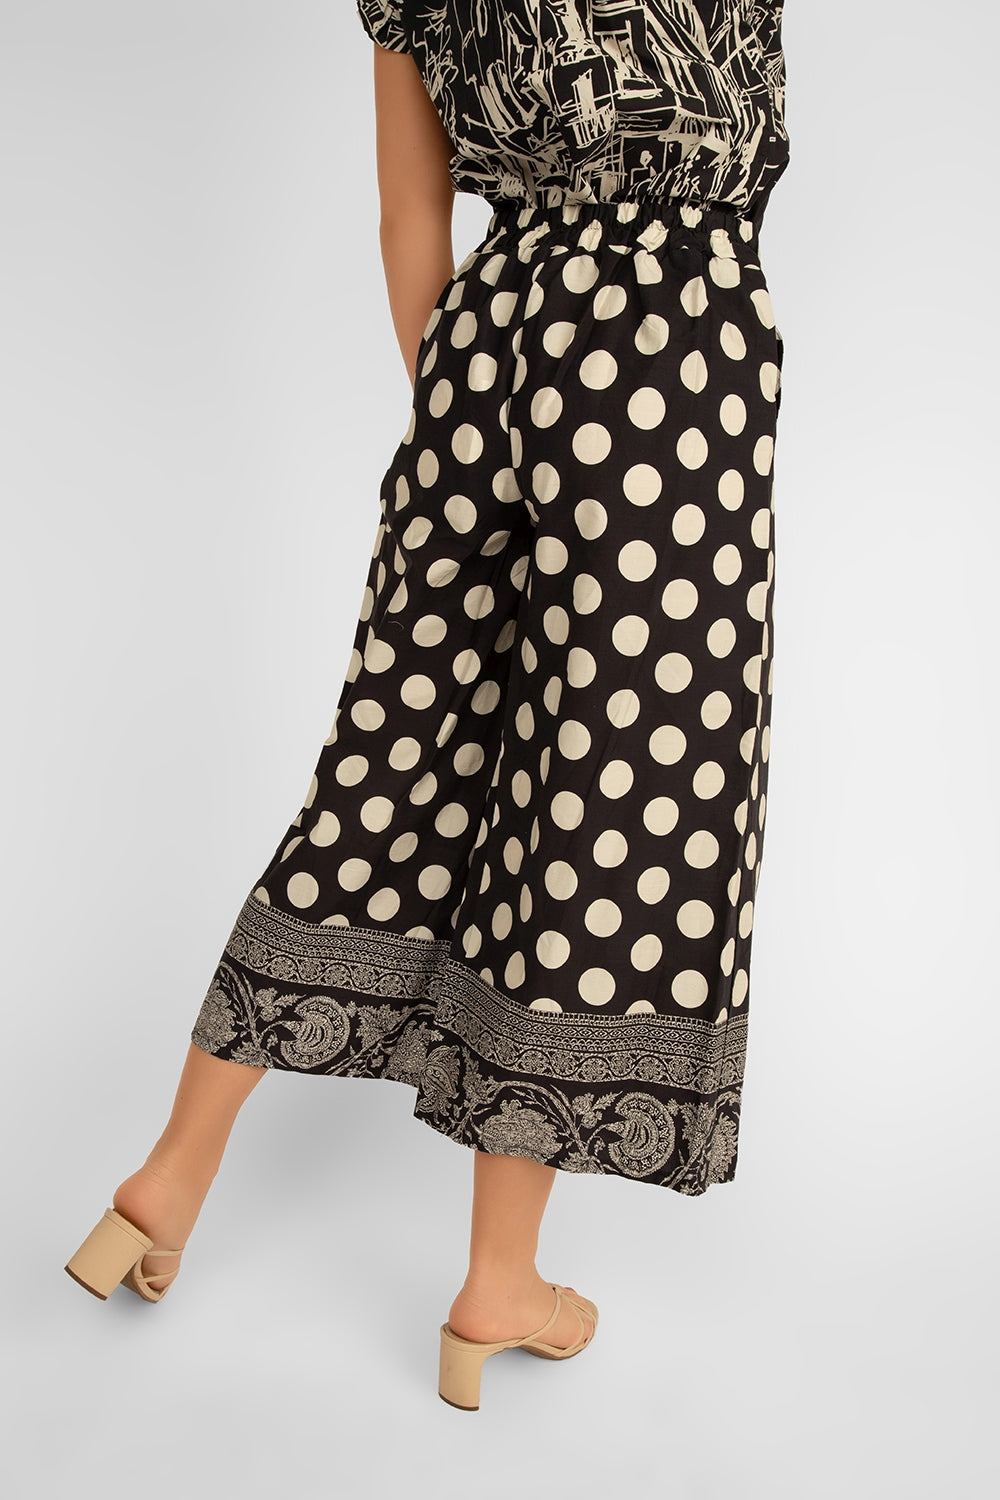 Back view of Julietta (10-H2117-C12-DOT) Women's Wide Leg Cropped Polka Dot Pleated Culottes in Black & White Polka Dot Print